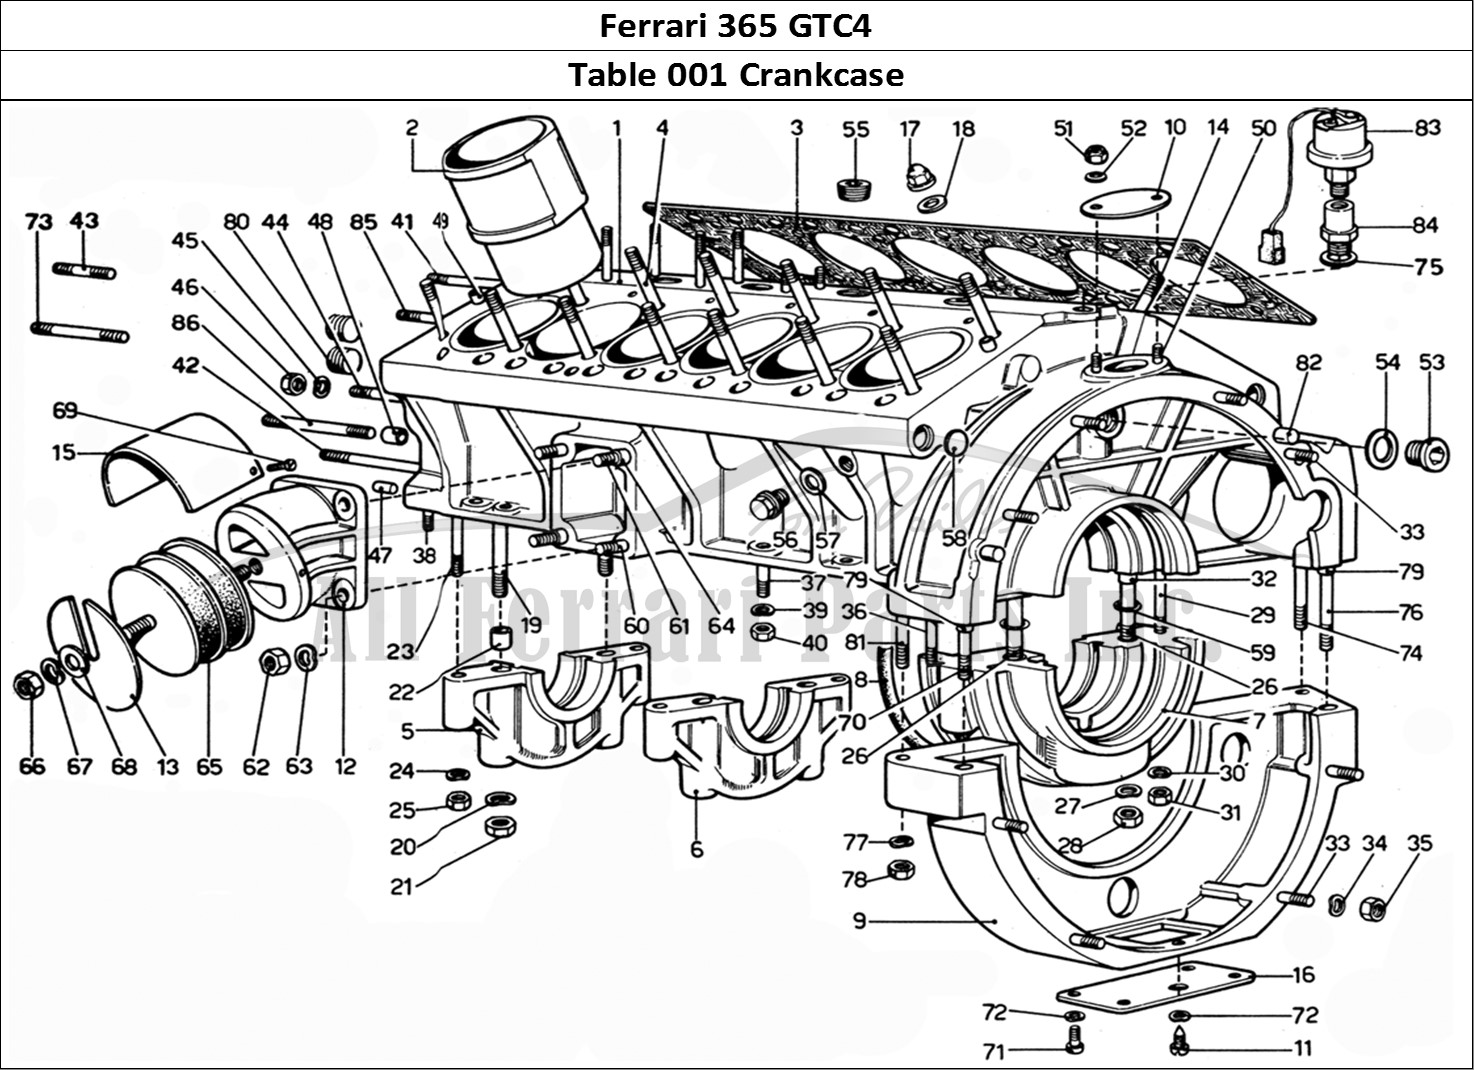 Ferrari Parts Ferrari 365 GTC4 (Mechanical) Page 001 Engine Block